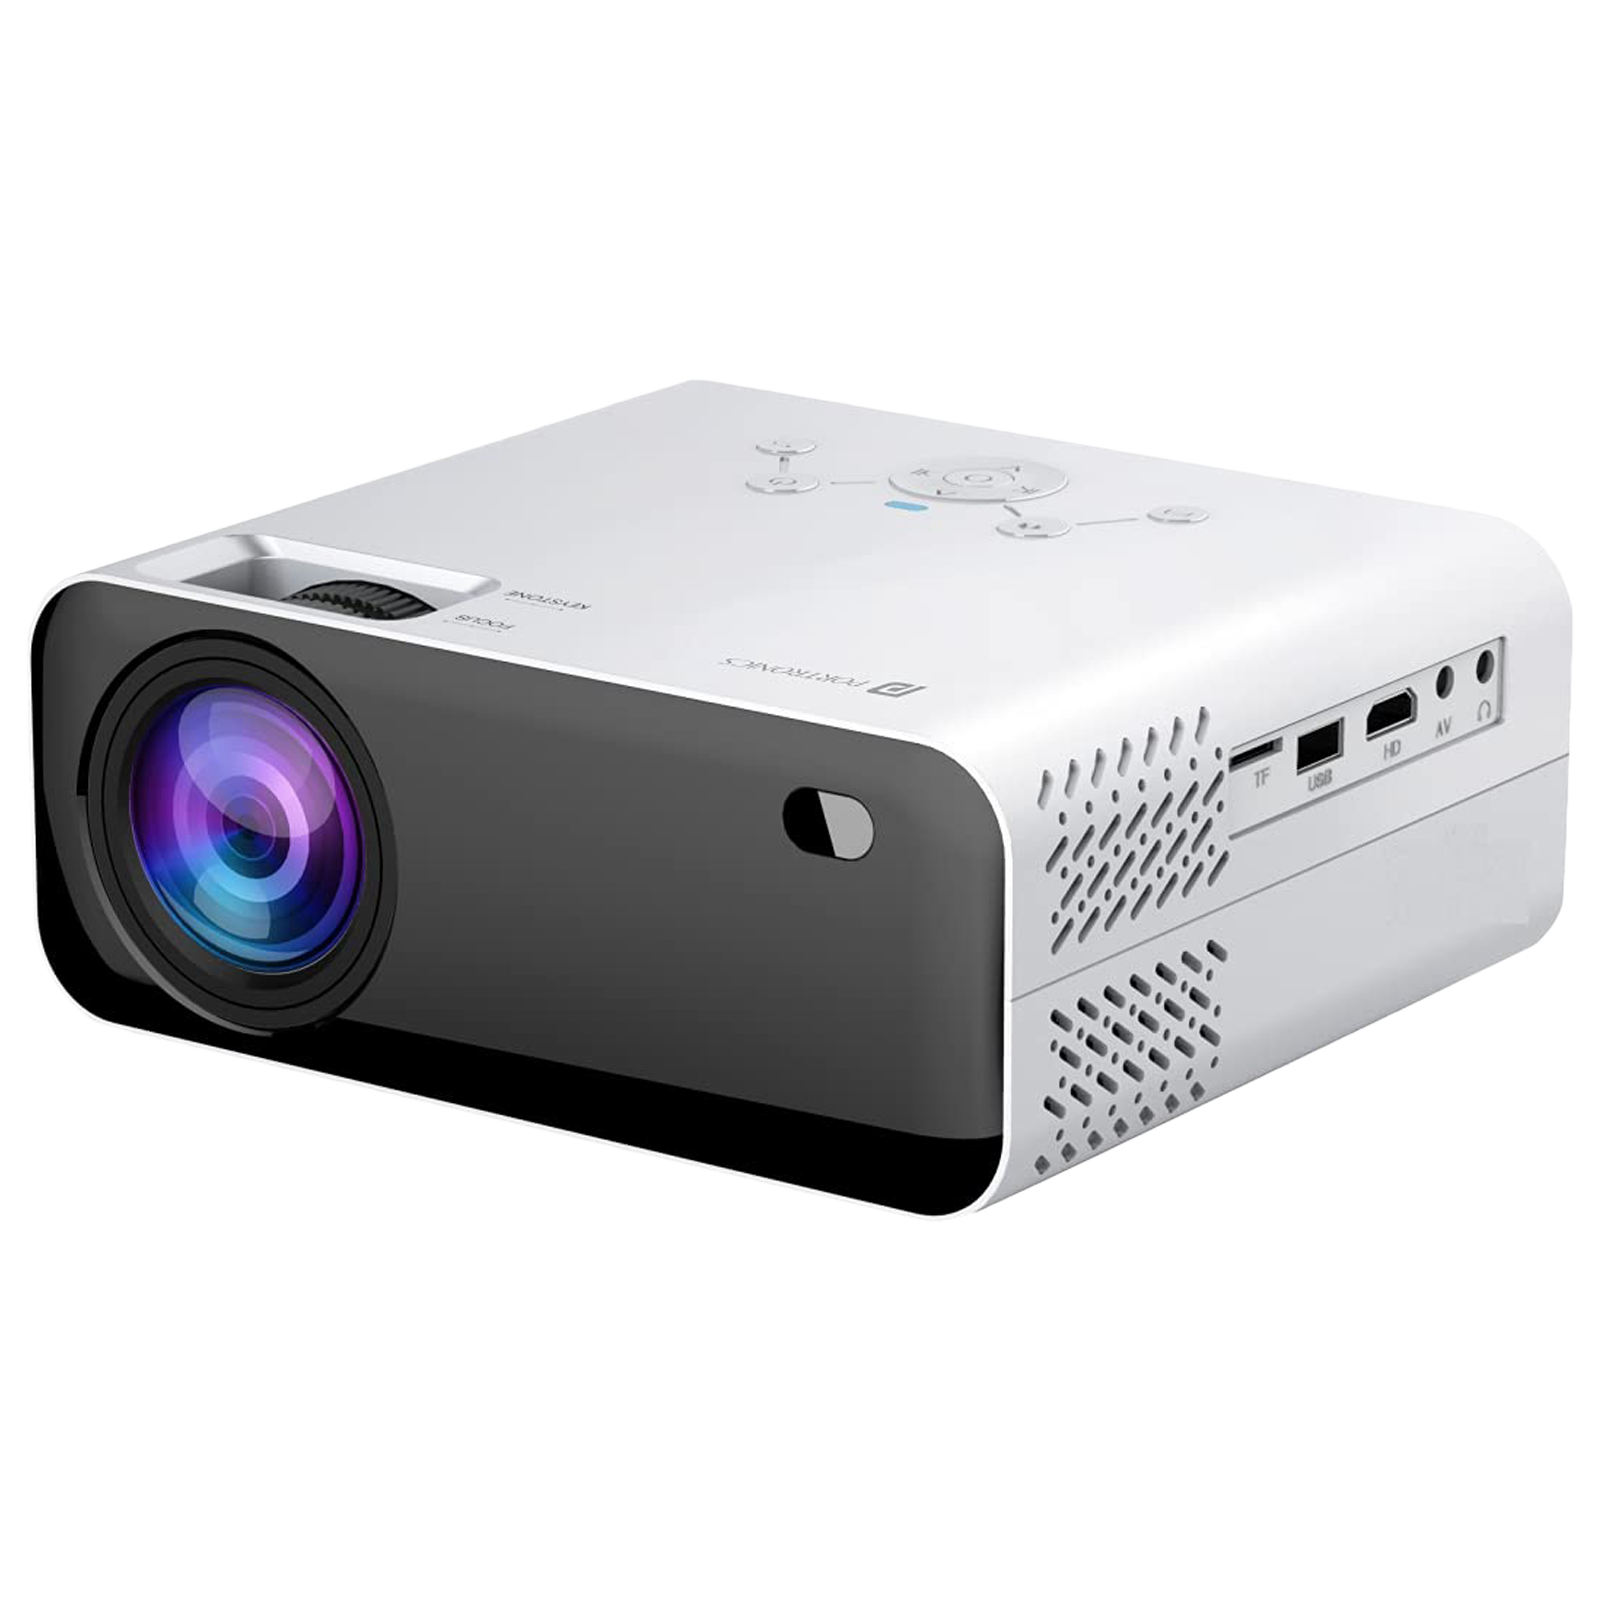 PORTRONICS BEEM 200 Plus Full HD LED Projector (200 Lumens, HDMI, WiFi, USB, VGA, Ultra-Vivid Picture, POR 283, White)